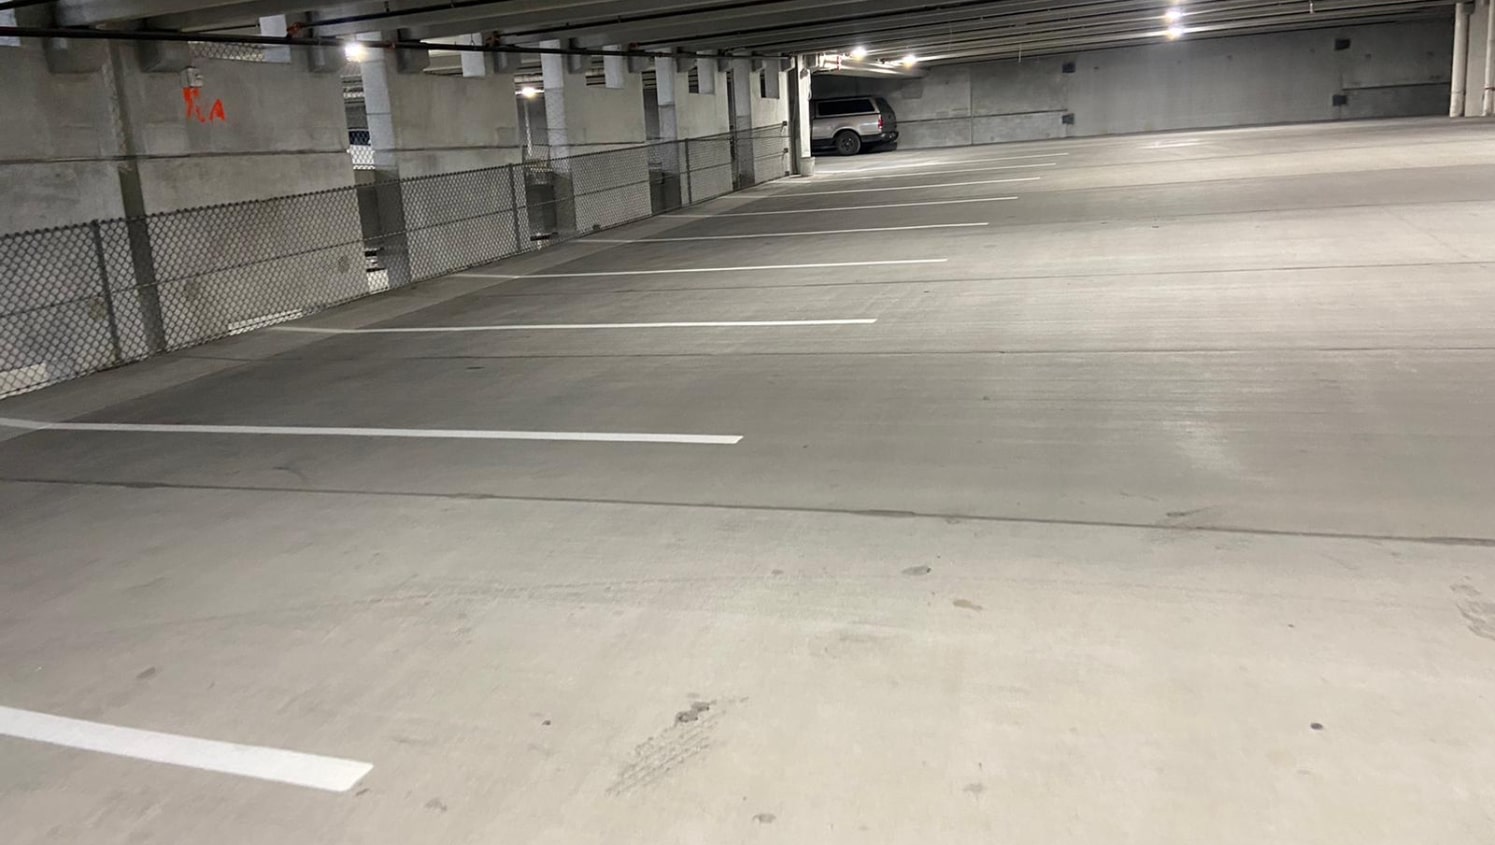 new parking layout in a garage